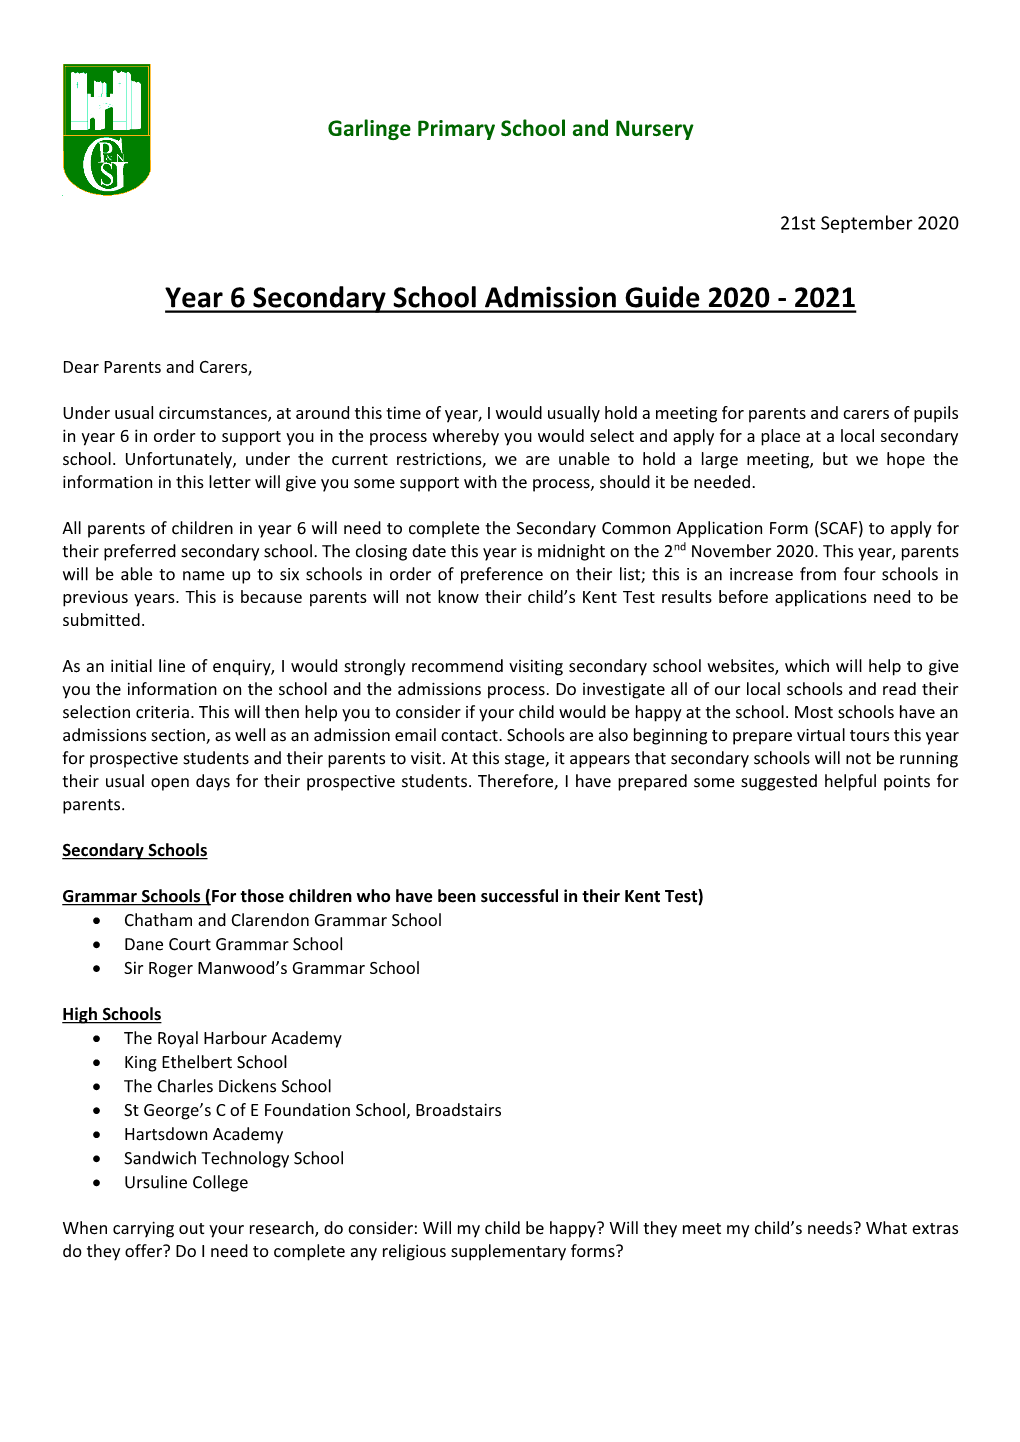 Secondary School Application Guidance 2020-2021